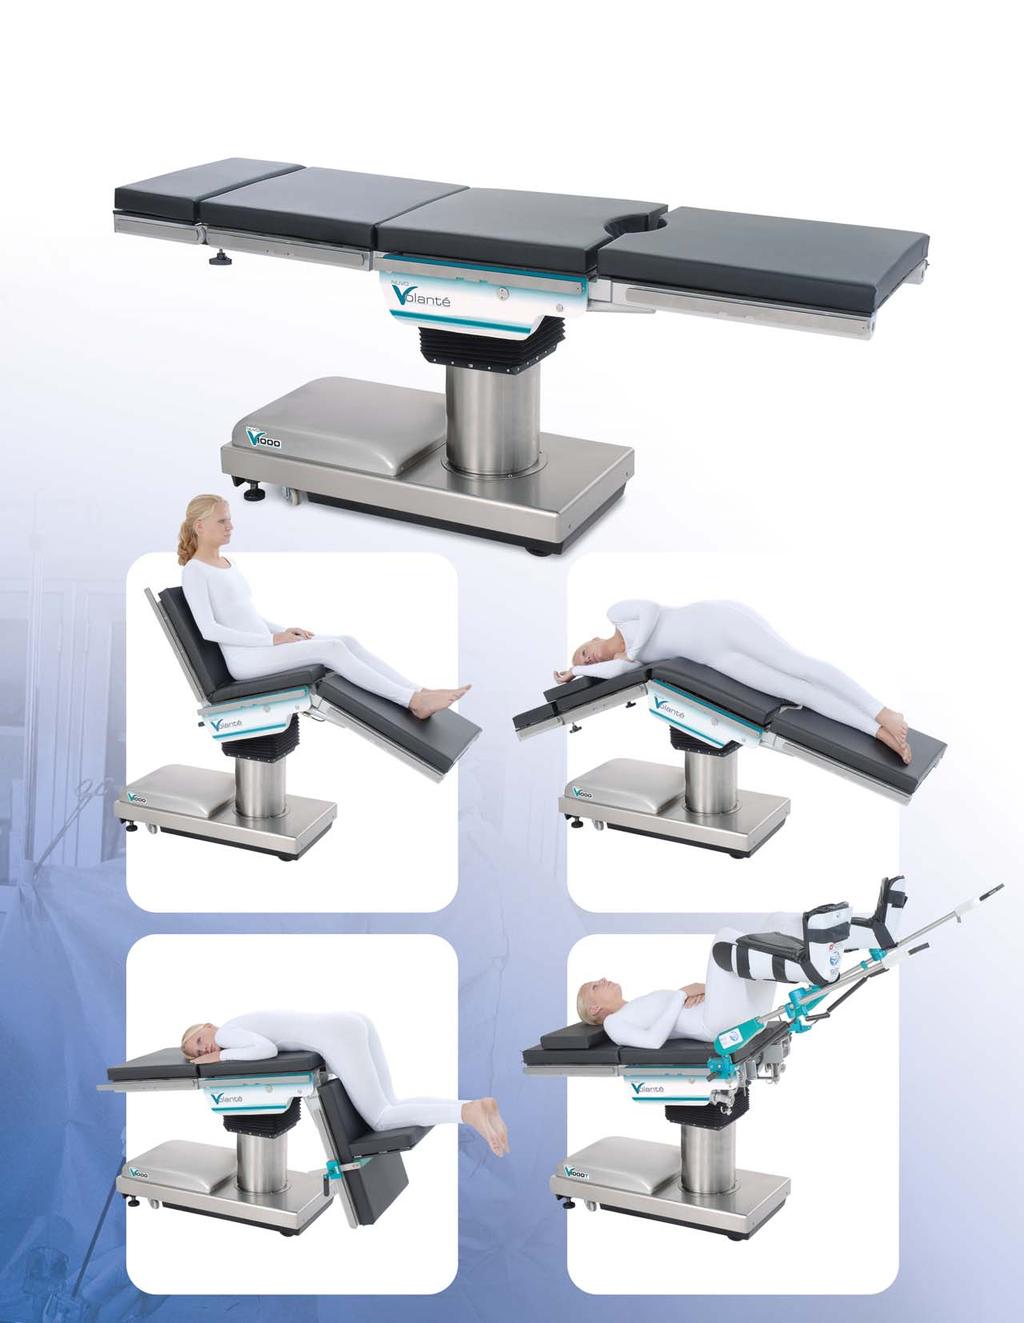 Models V1000T, V1000 & V750 Neurological Seated Position